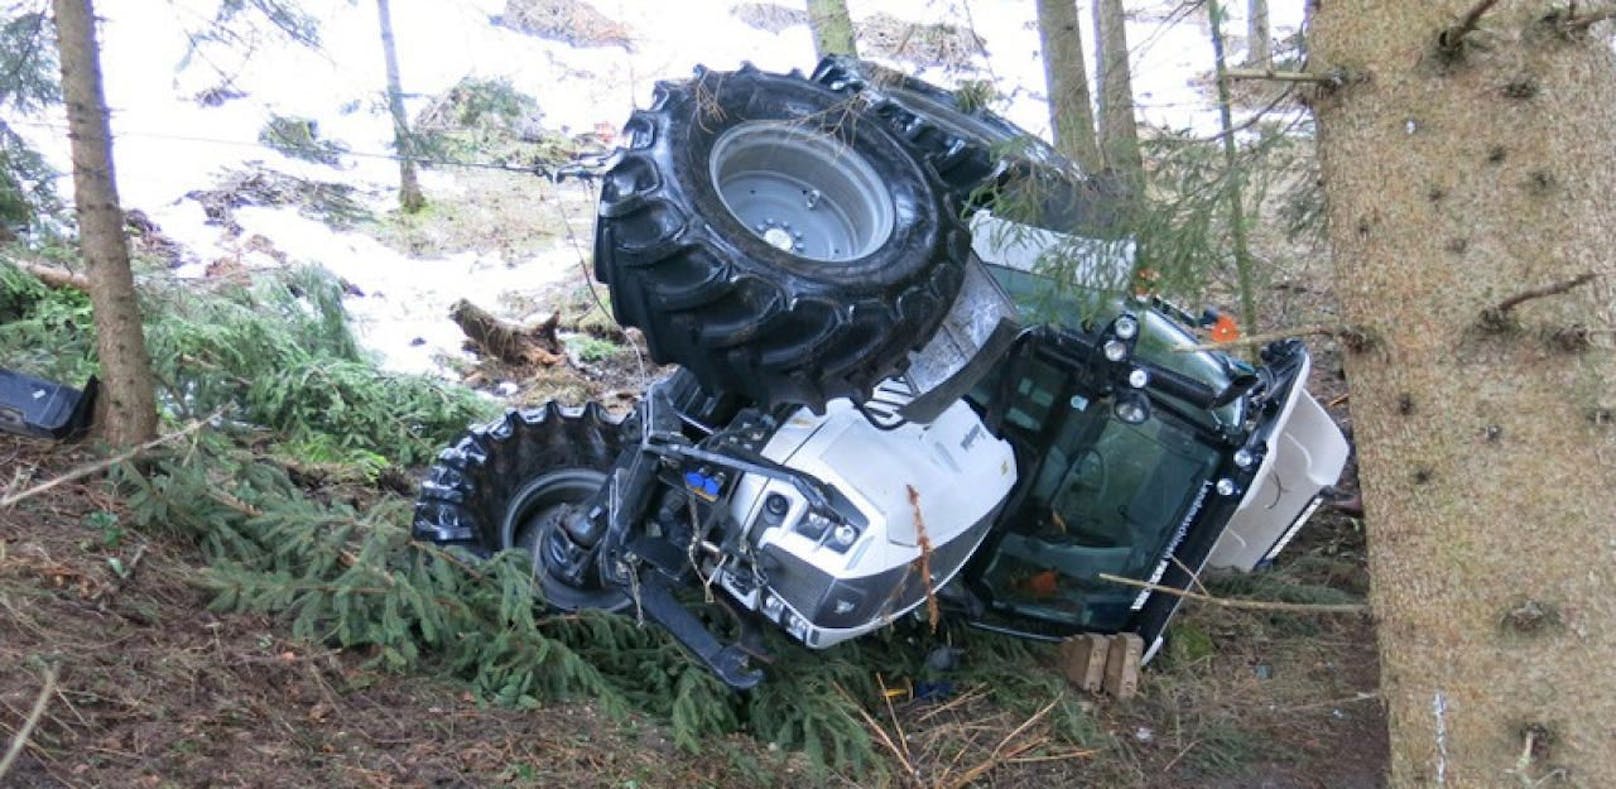 Tödlicher Unfall: Sohn fand Vater (50) unter Traktor